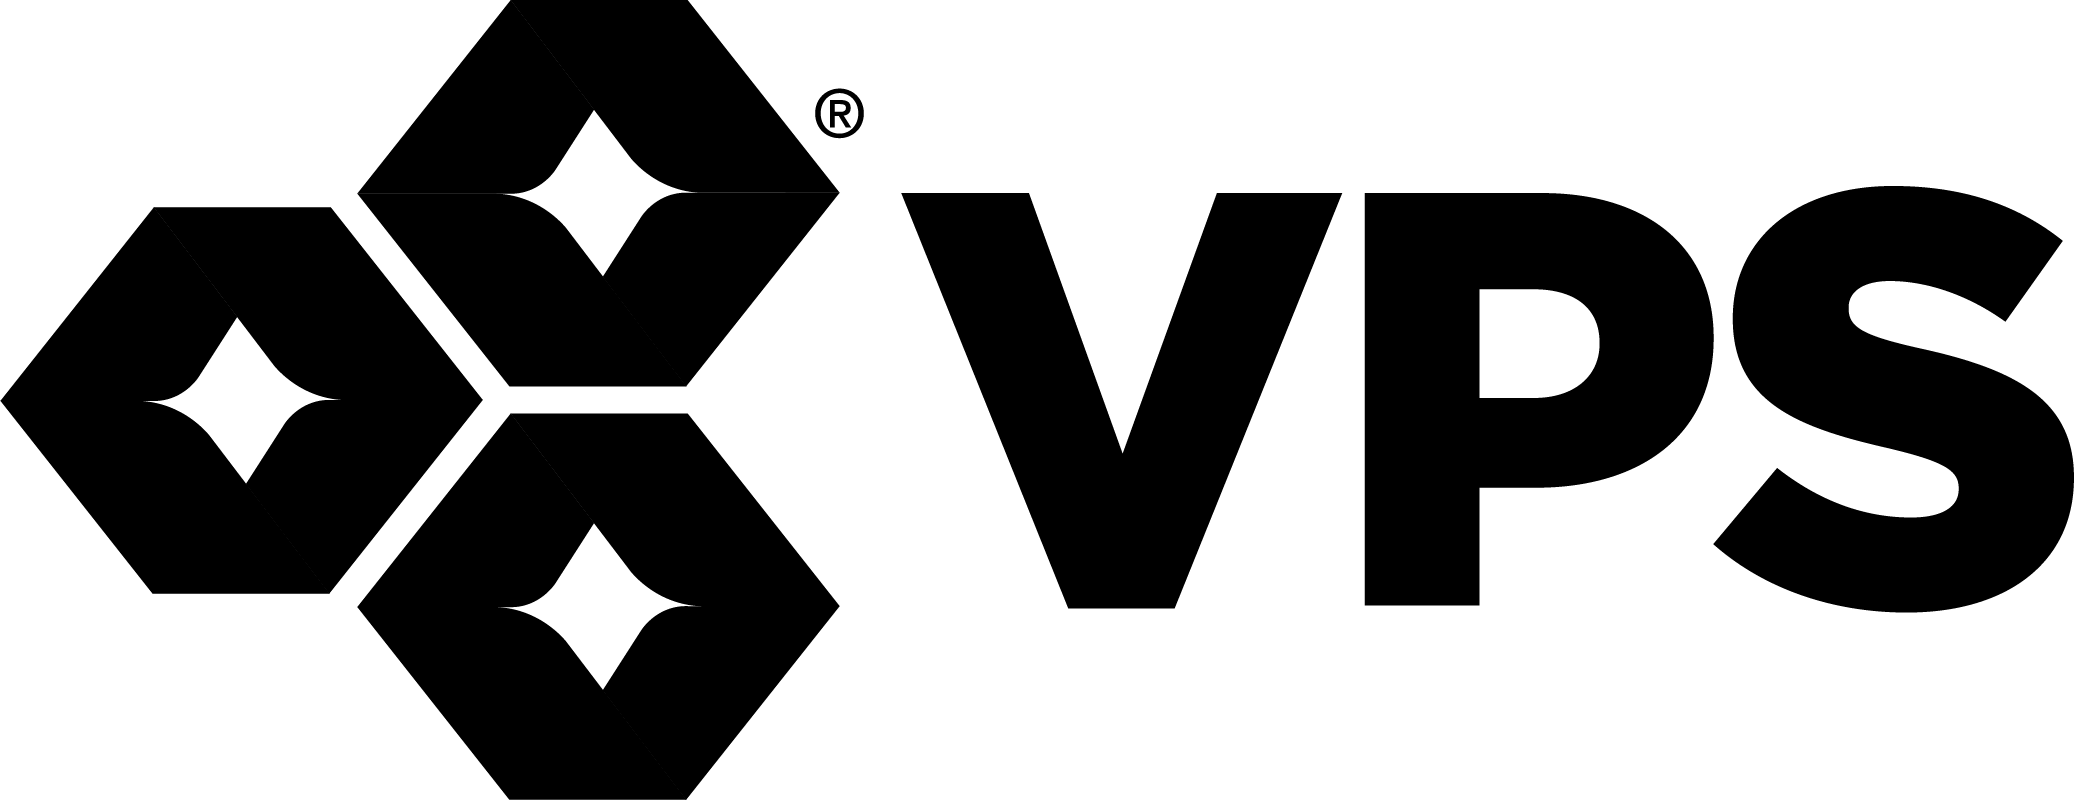 (c) Vps-corporate.com